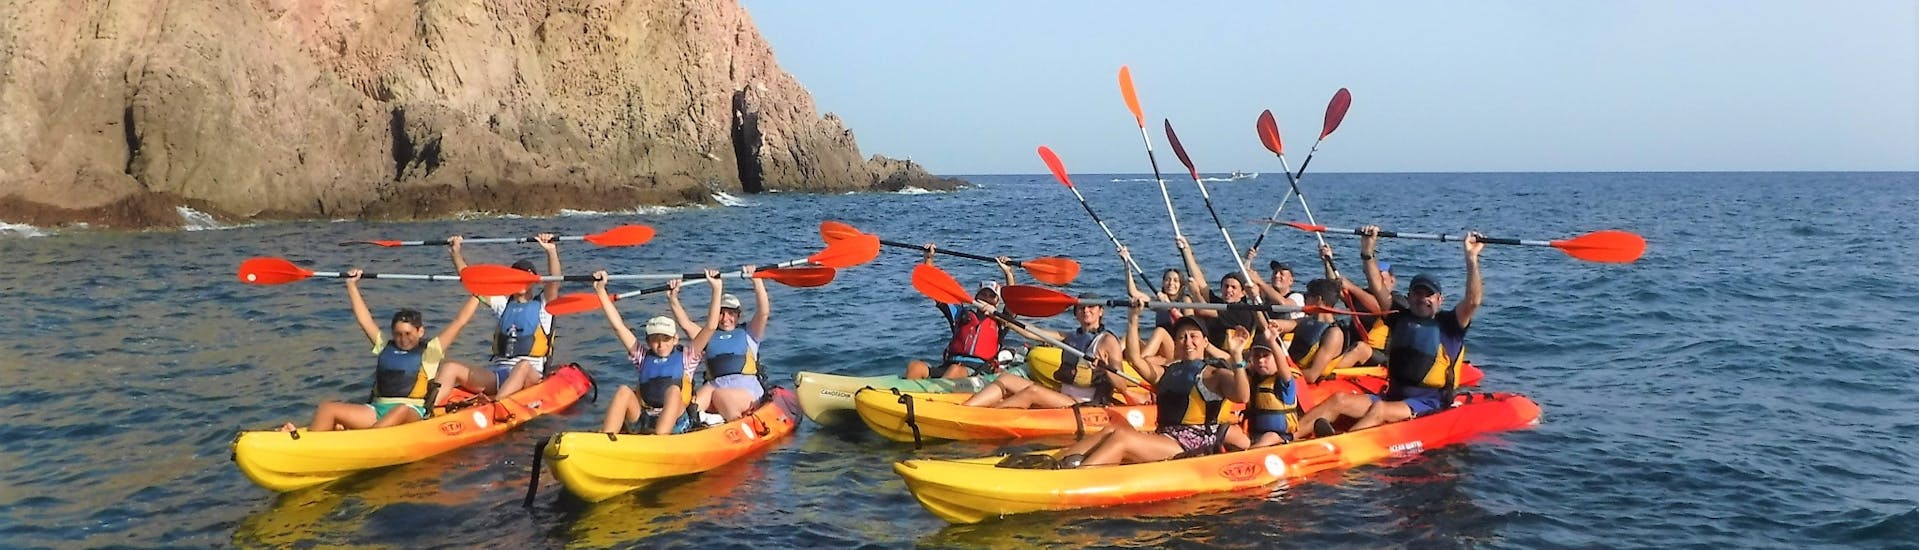 Leichte Kayak & Kanu-Tour in Cabo de Gata.